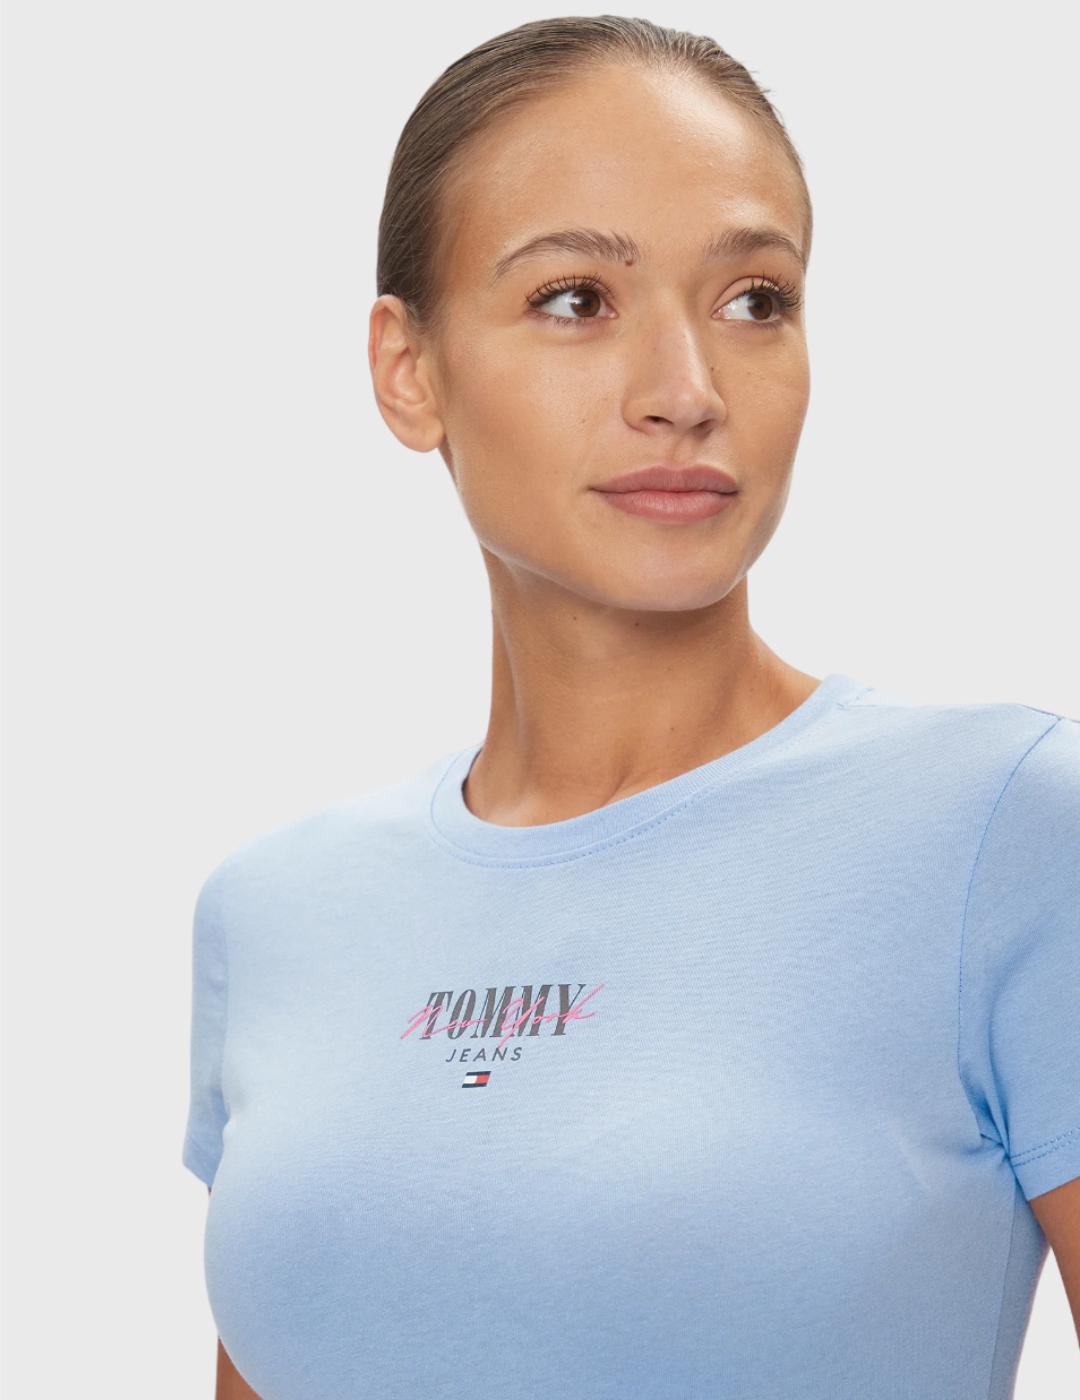 Camiseta Tommy Jeans Slim Azul para Mujer